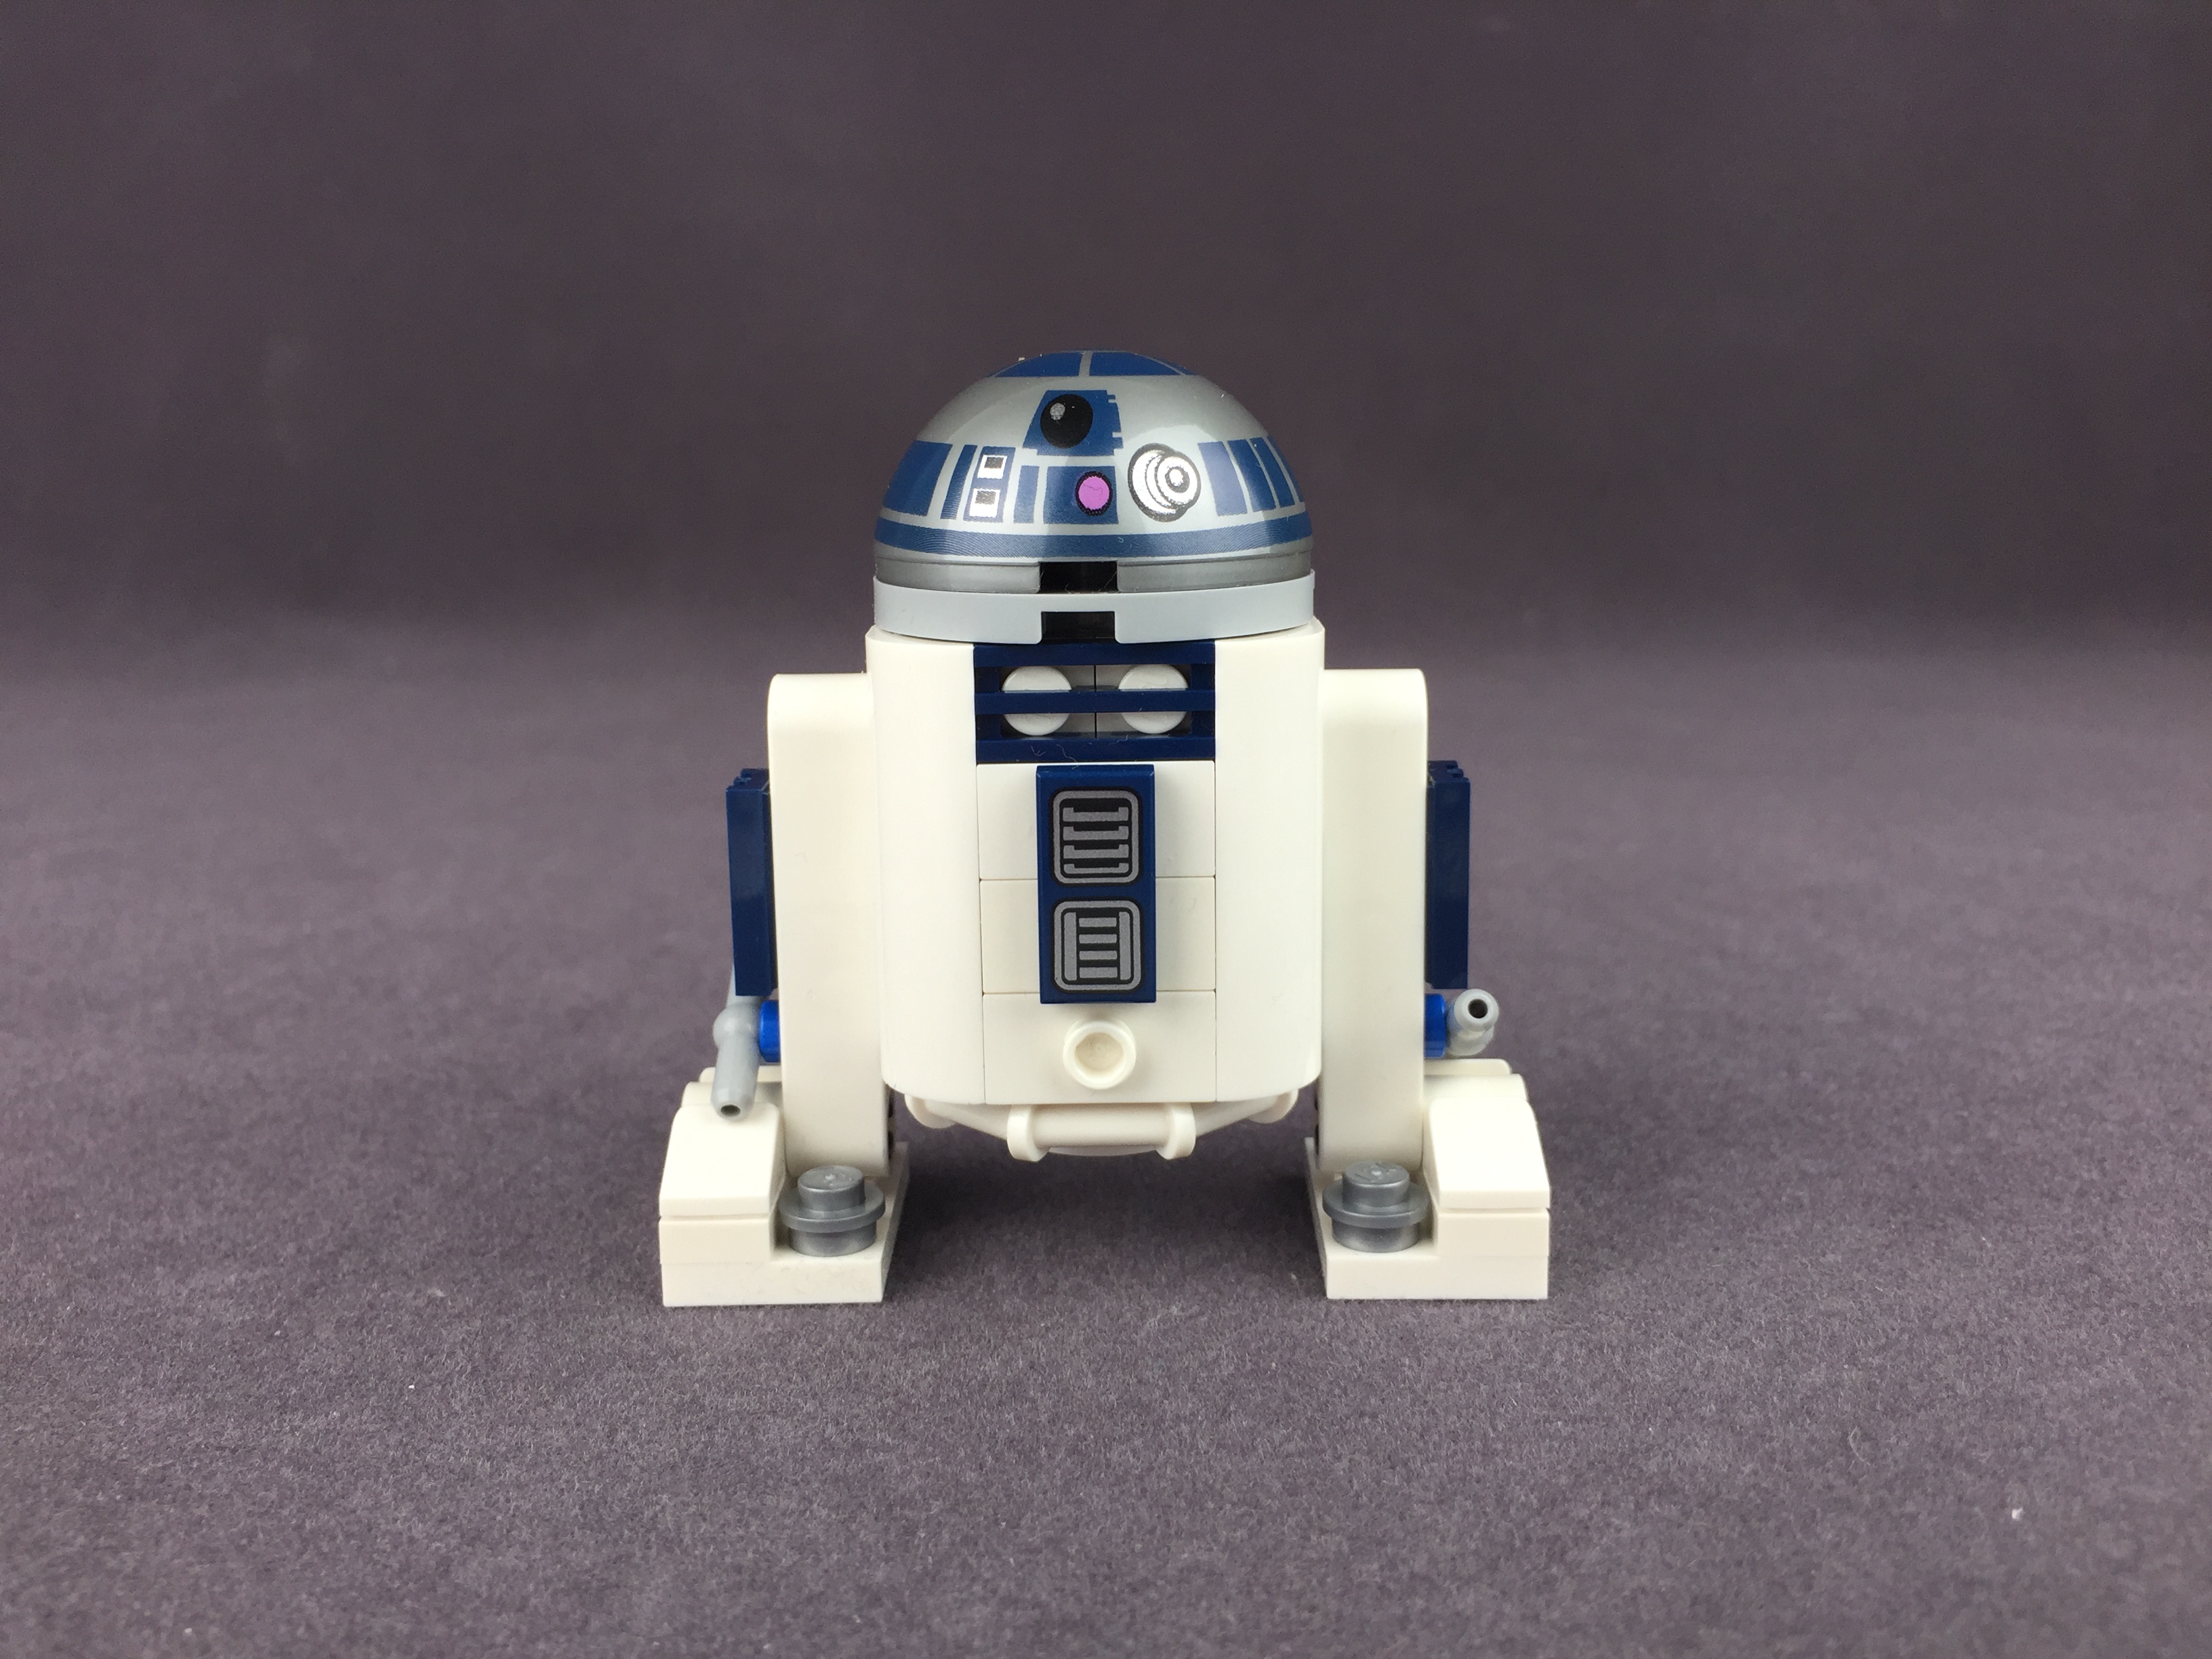 Lego Star Wars R2-D2 30611 70 Piece Lego Mini Figure - May 4th 2017 Release